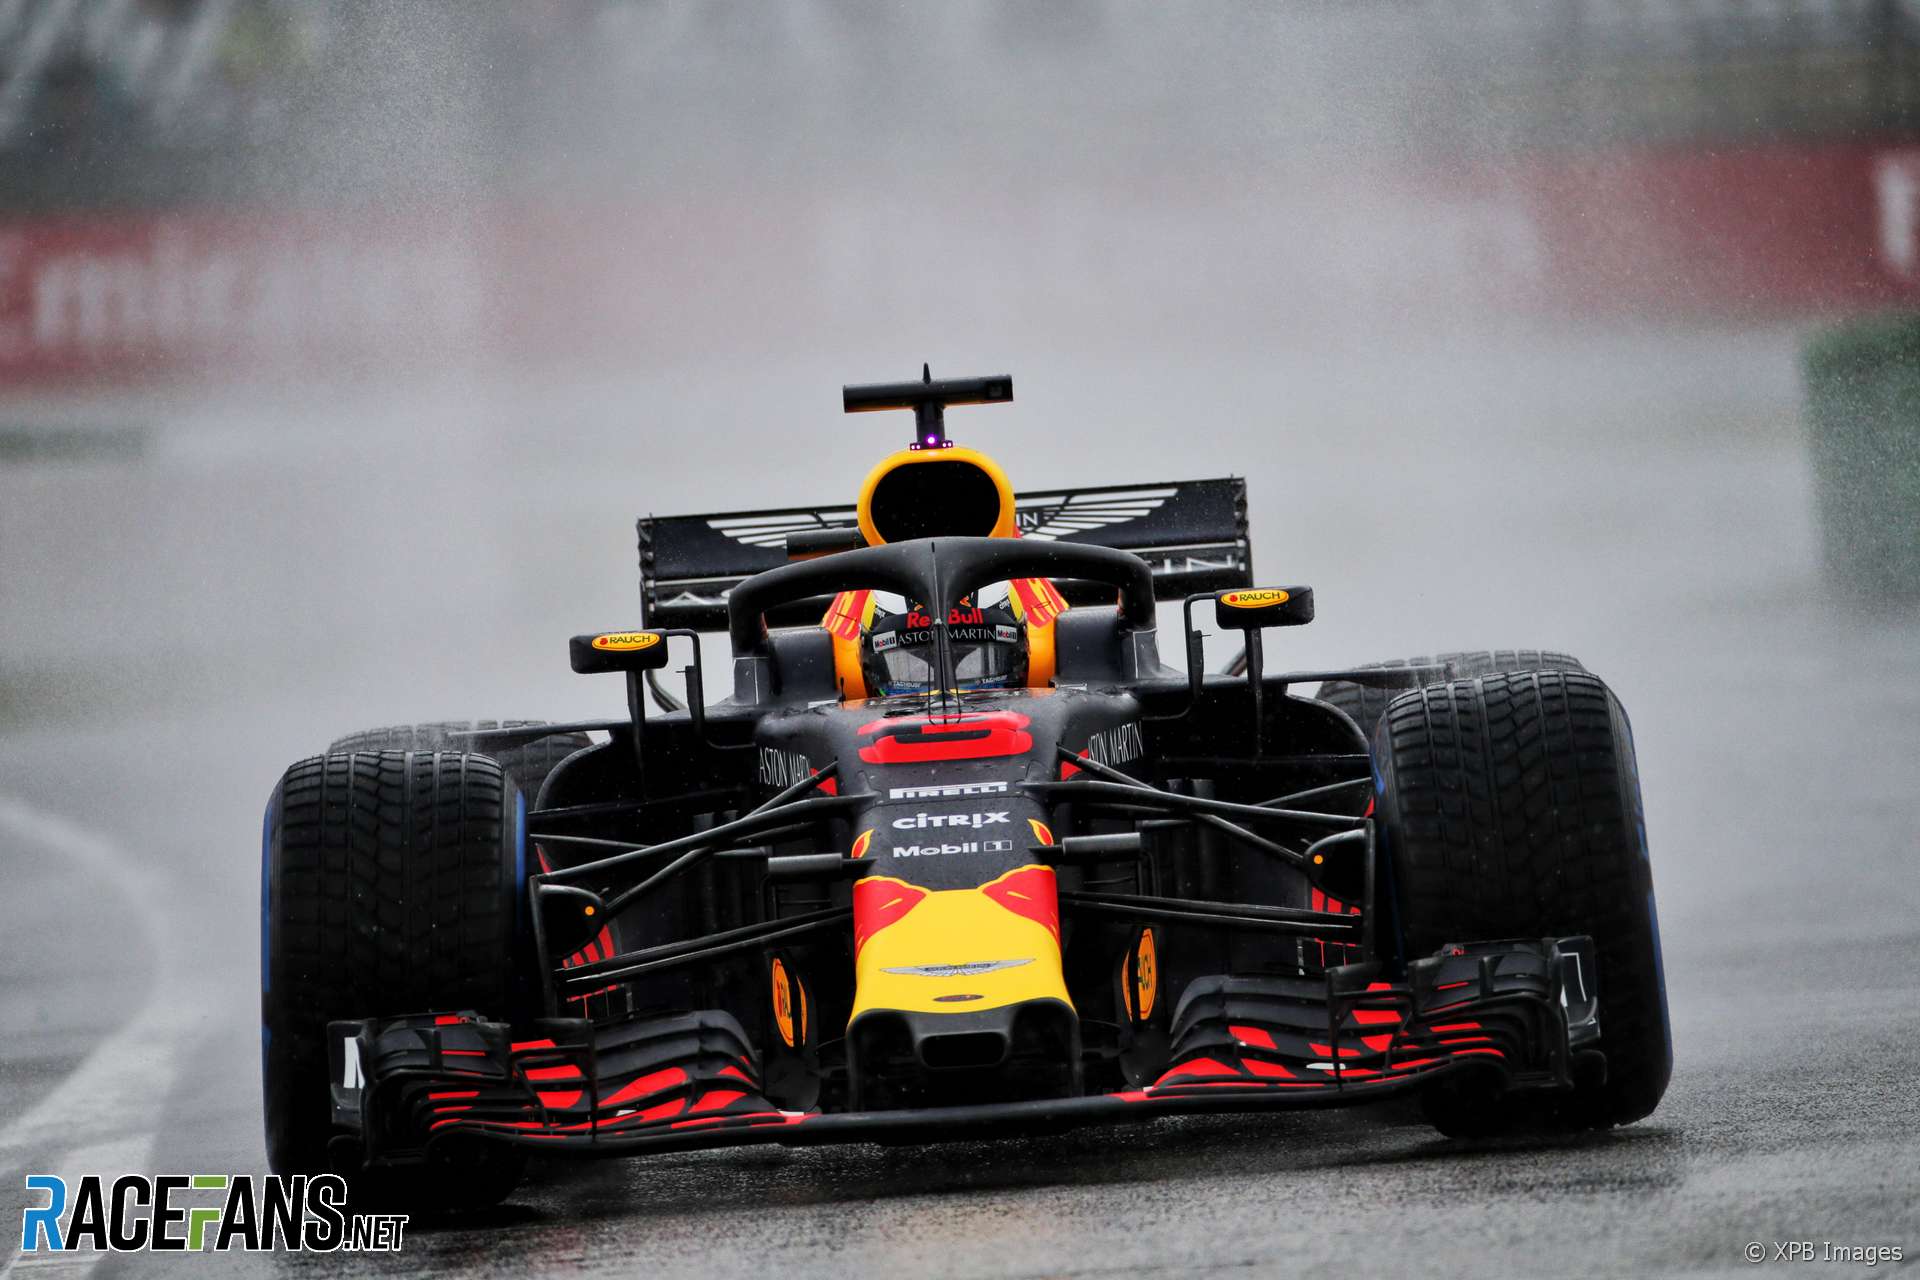 Daniel Ricciardo, Red Bull, Hockenheimring, 2018